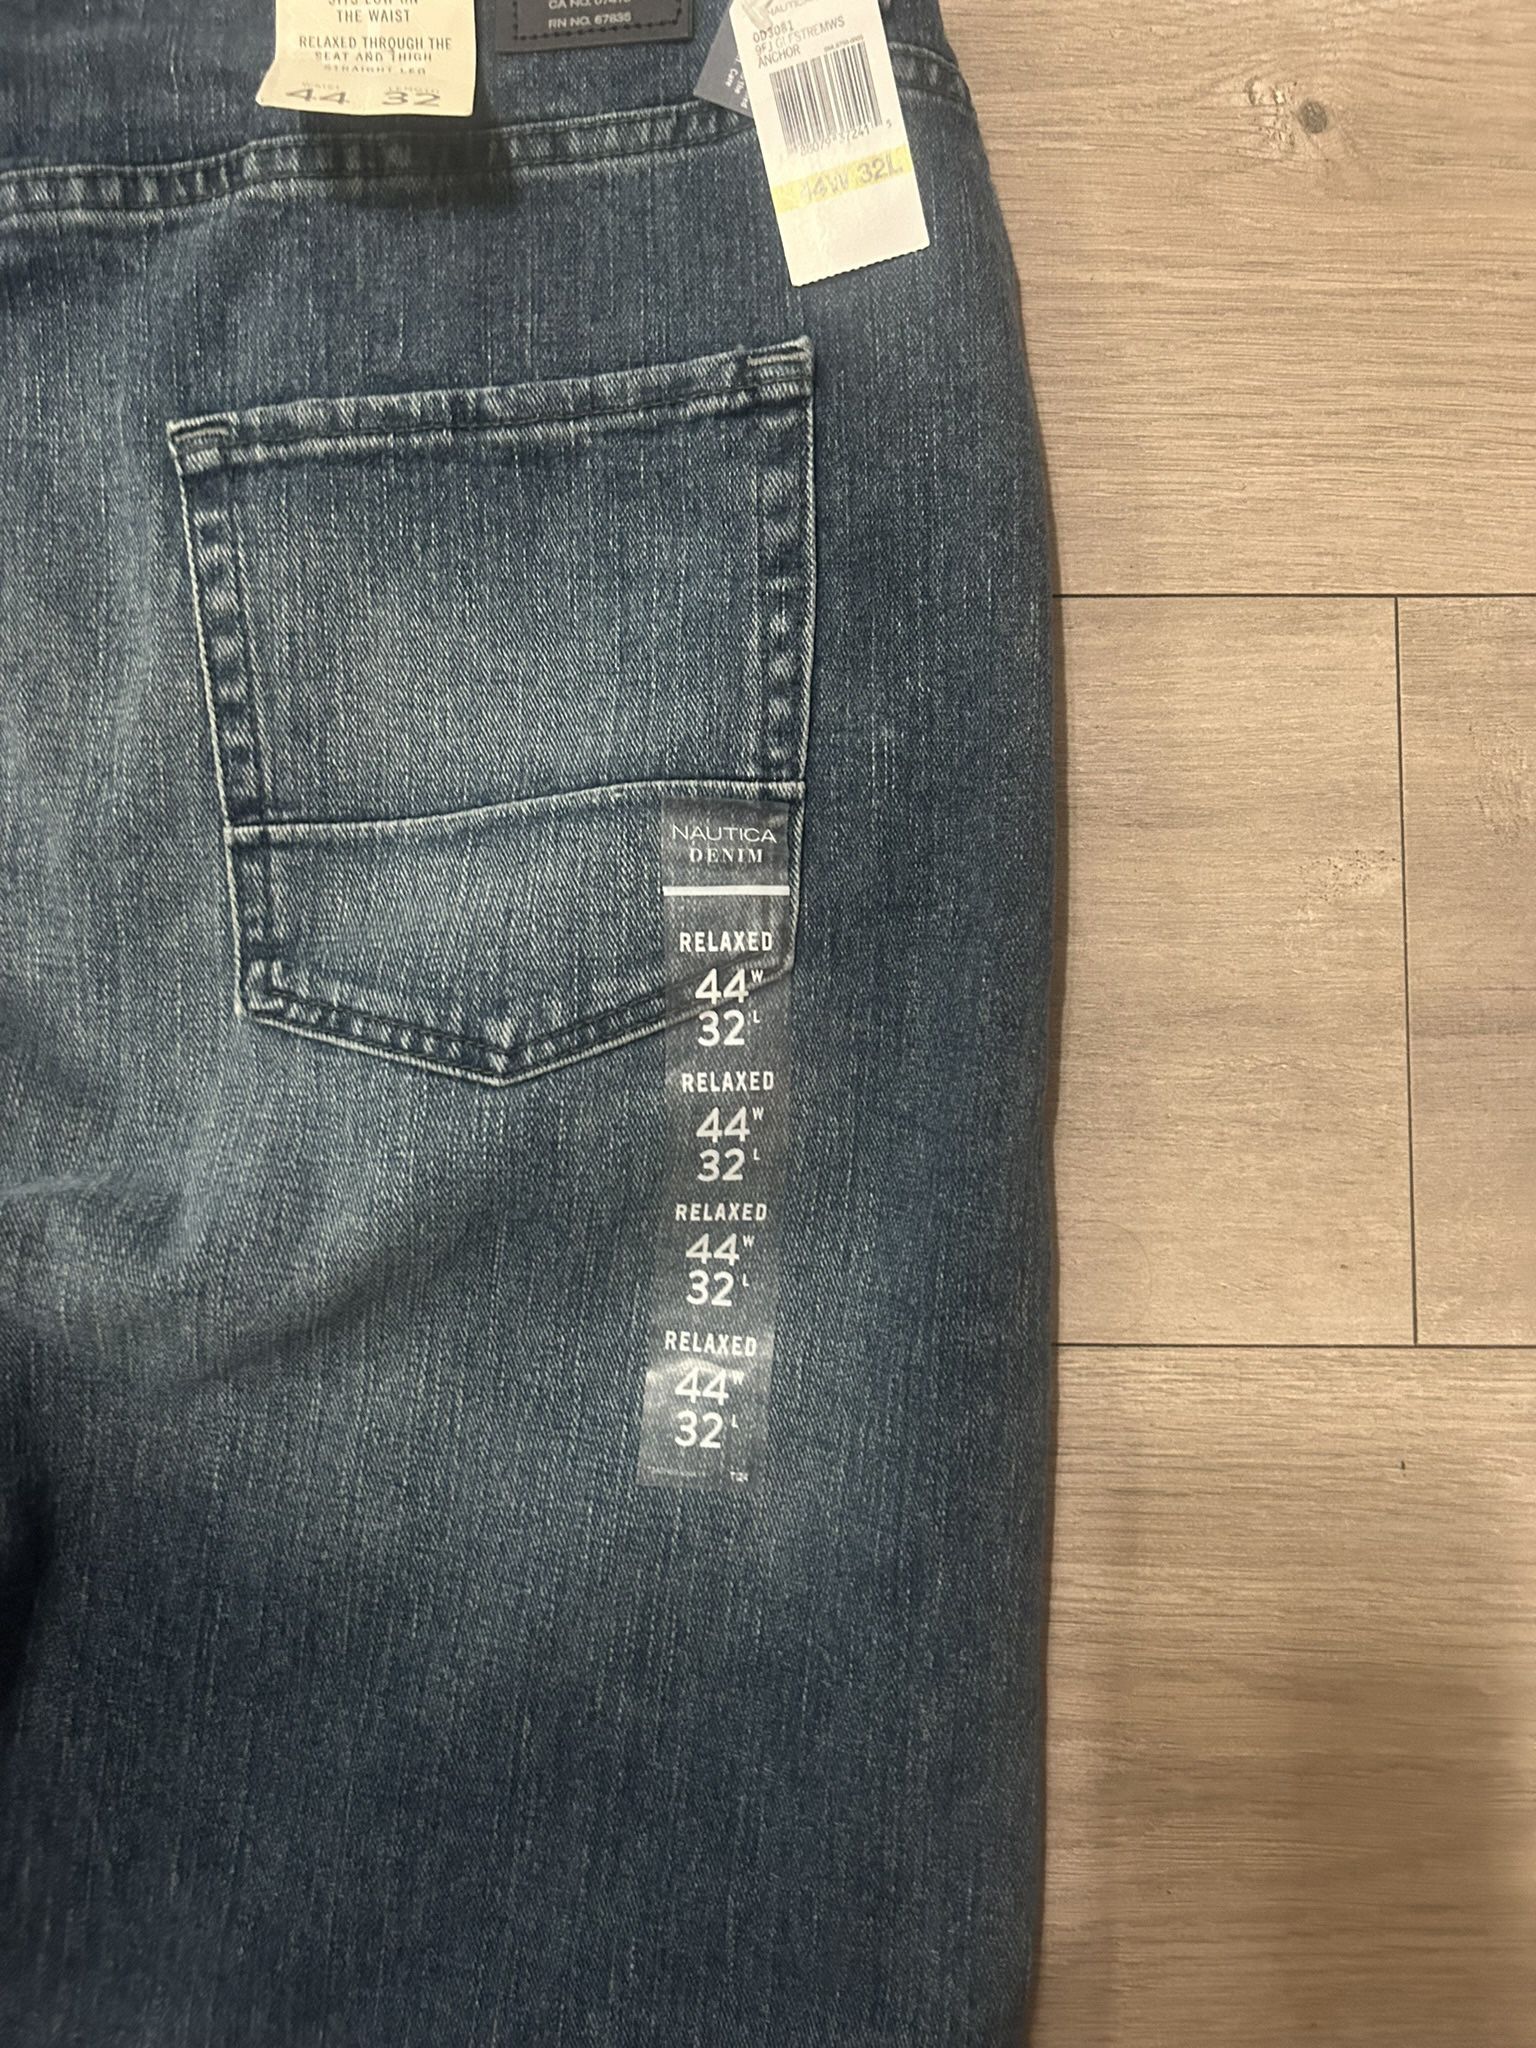 New Jeans Nautica Size 44